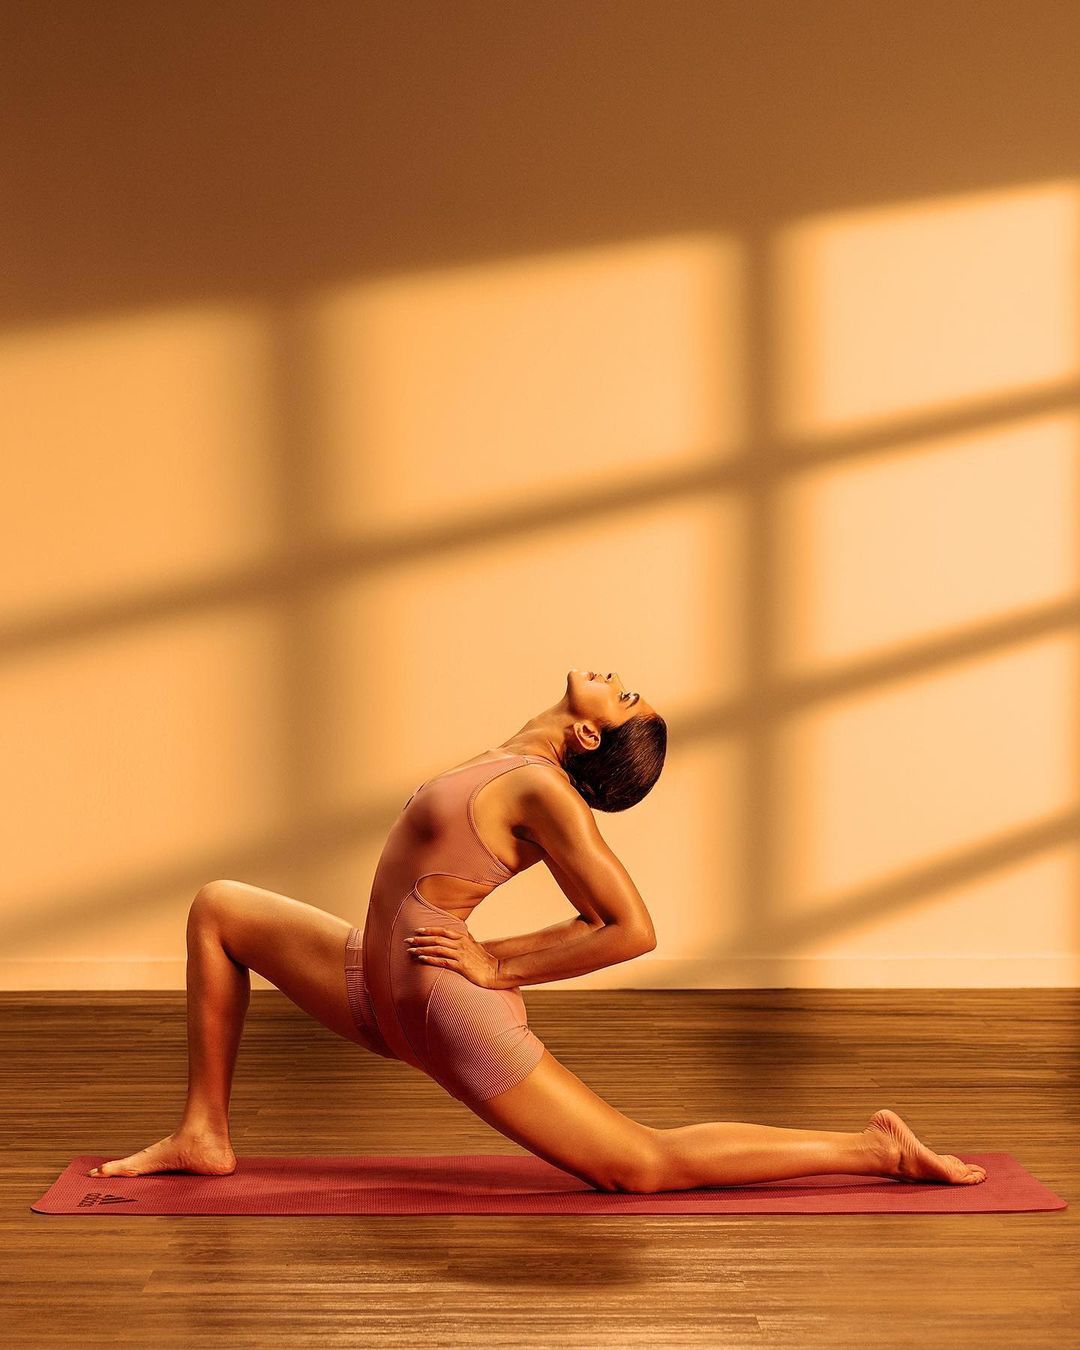 Deepika Padukone flaunts her leg muscles in this yoga pose